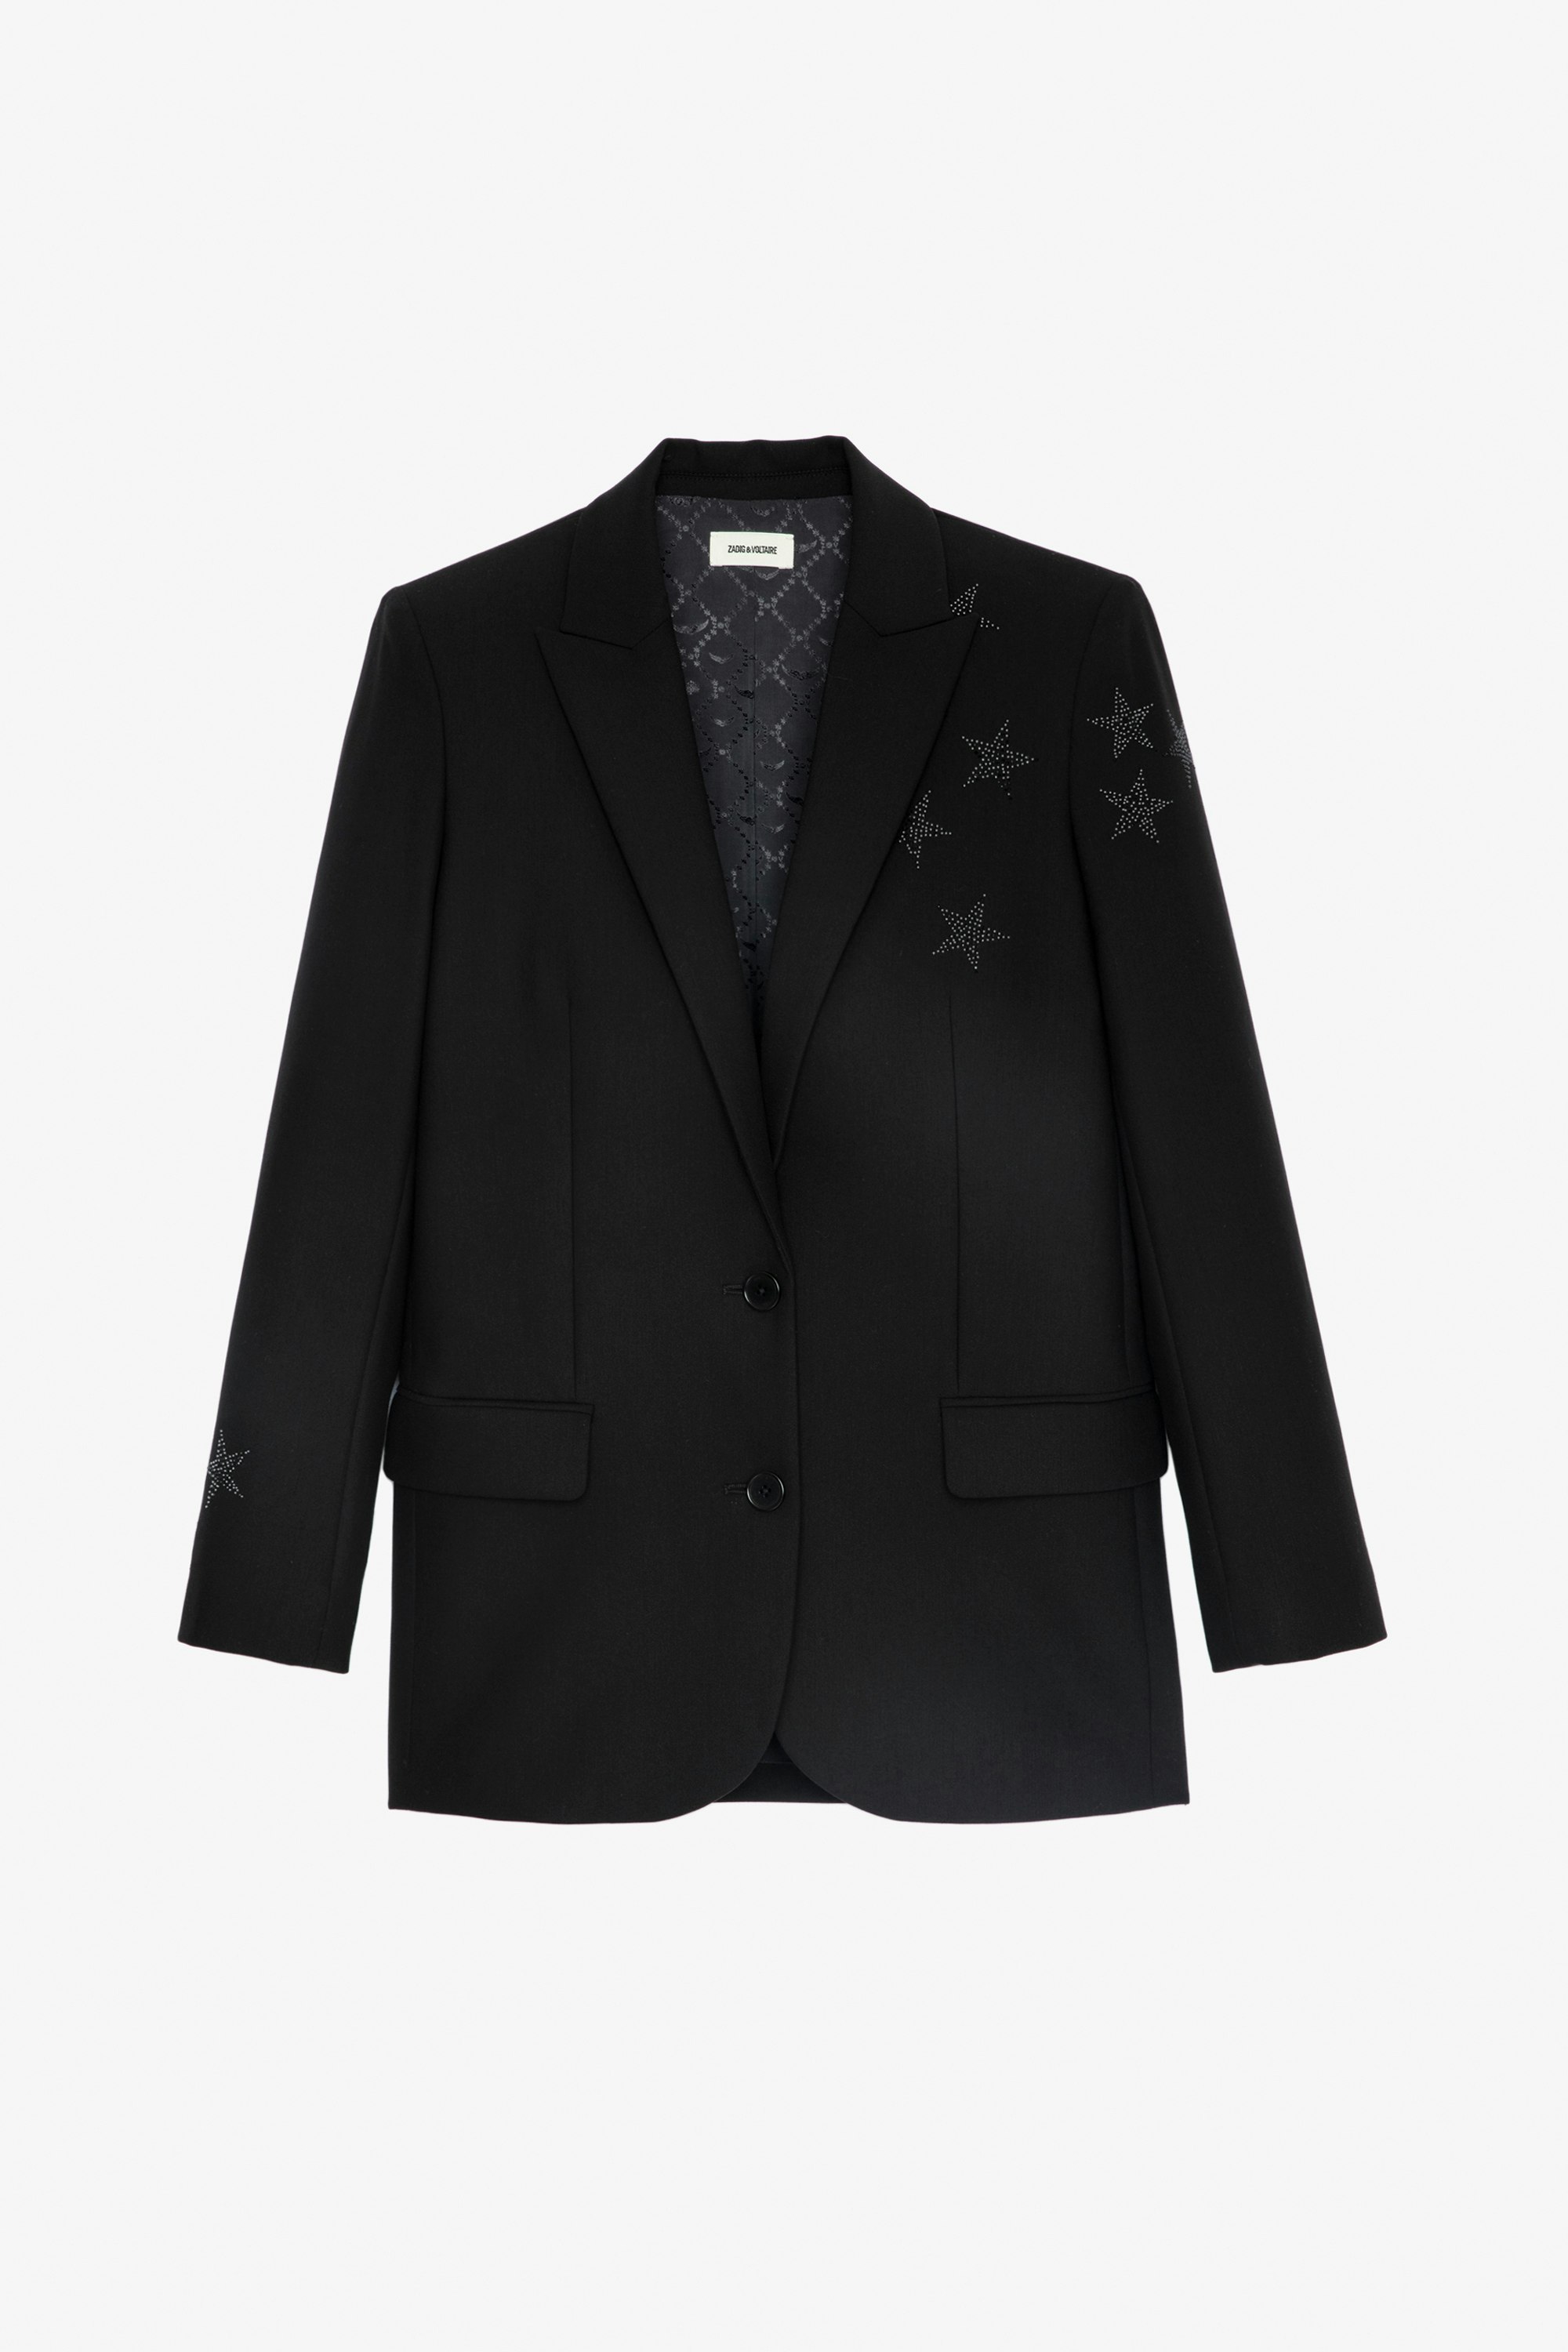 Viva Strass Star Blazer - Women’s black blazer with rhinestones